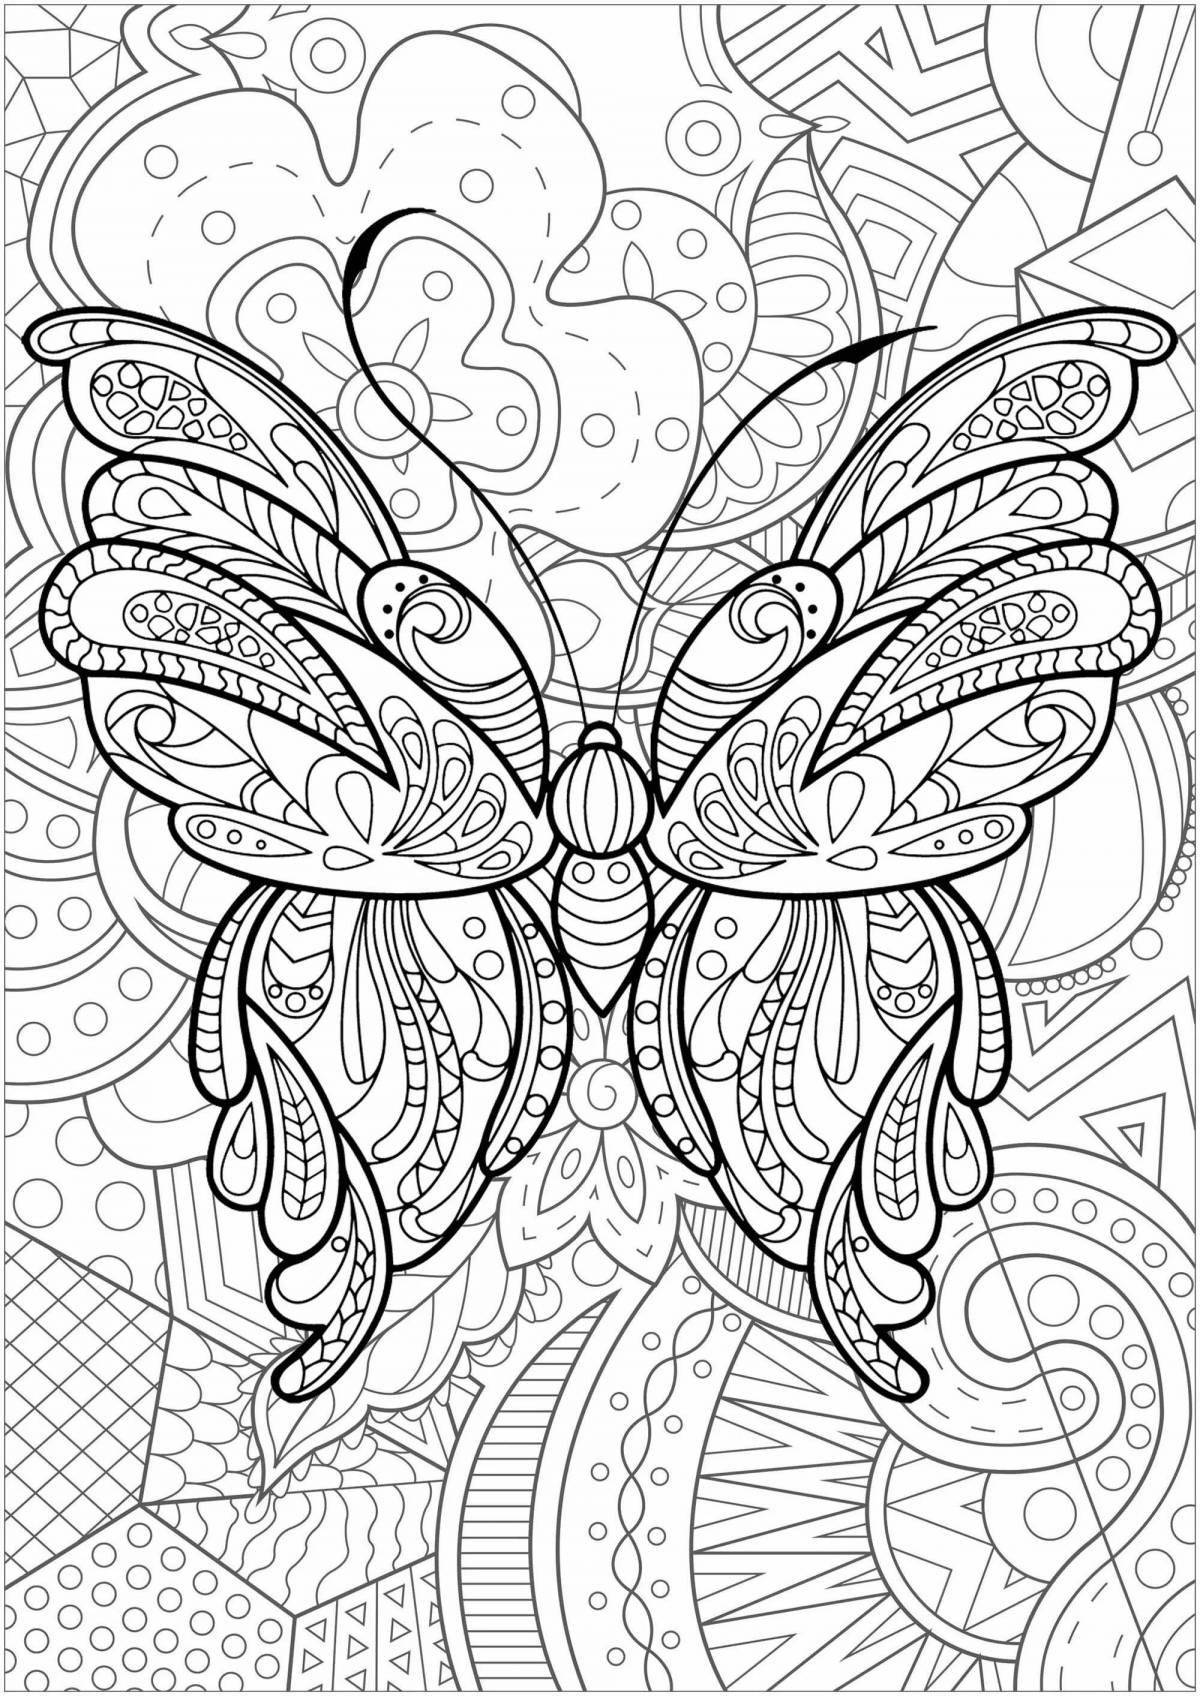 Fun anti-stress coloring book butterfly